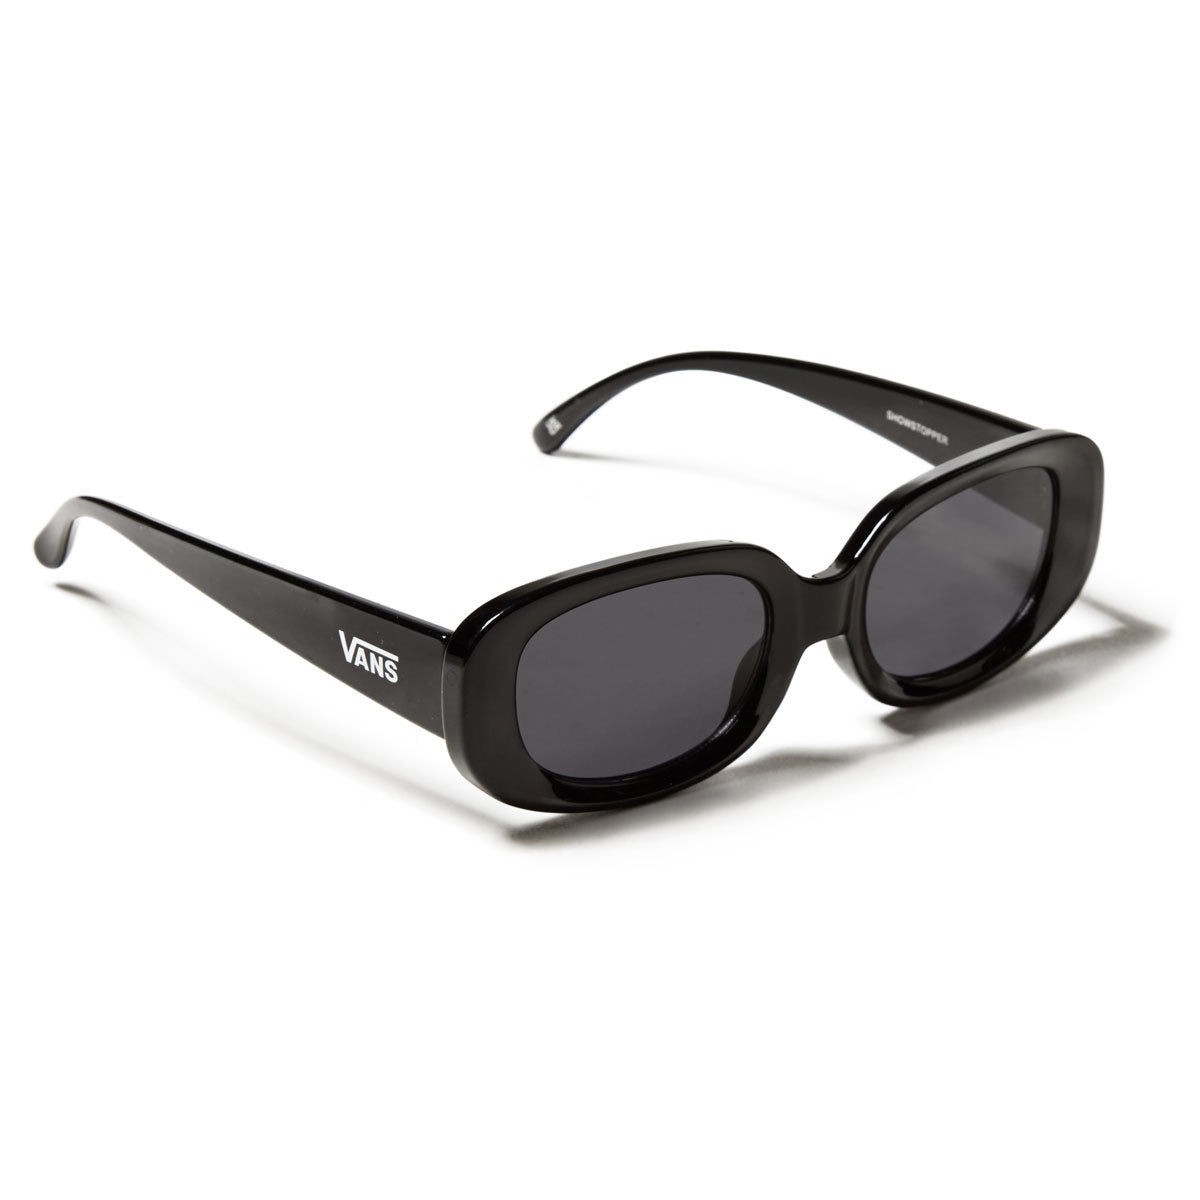 Vans Showstopper Sunglasses - Black image 1